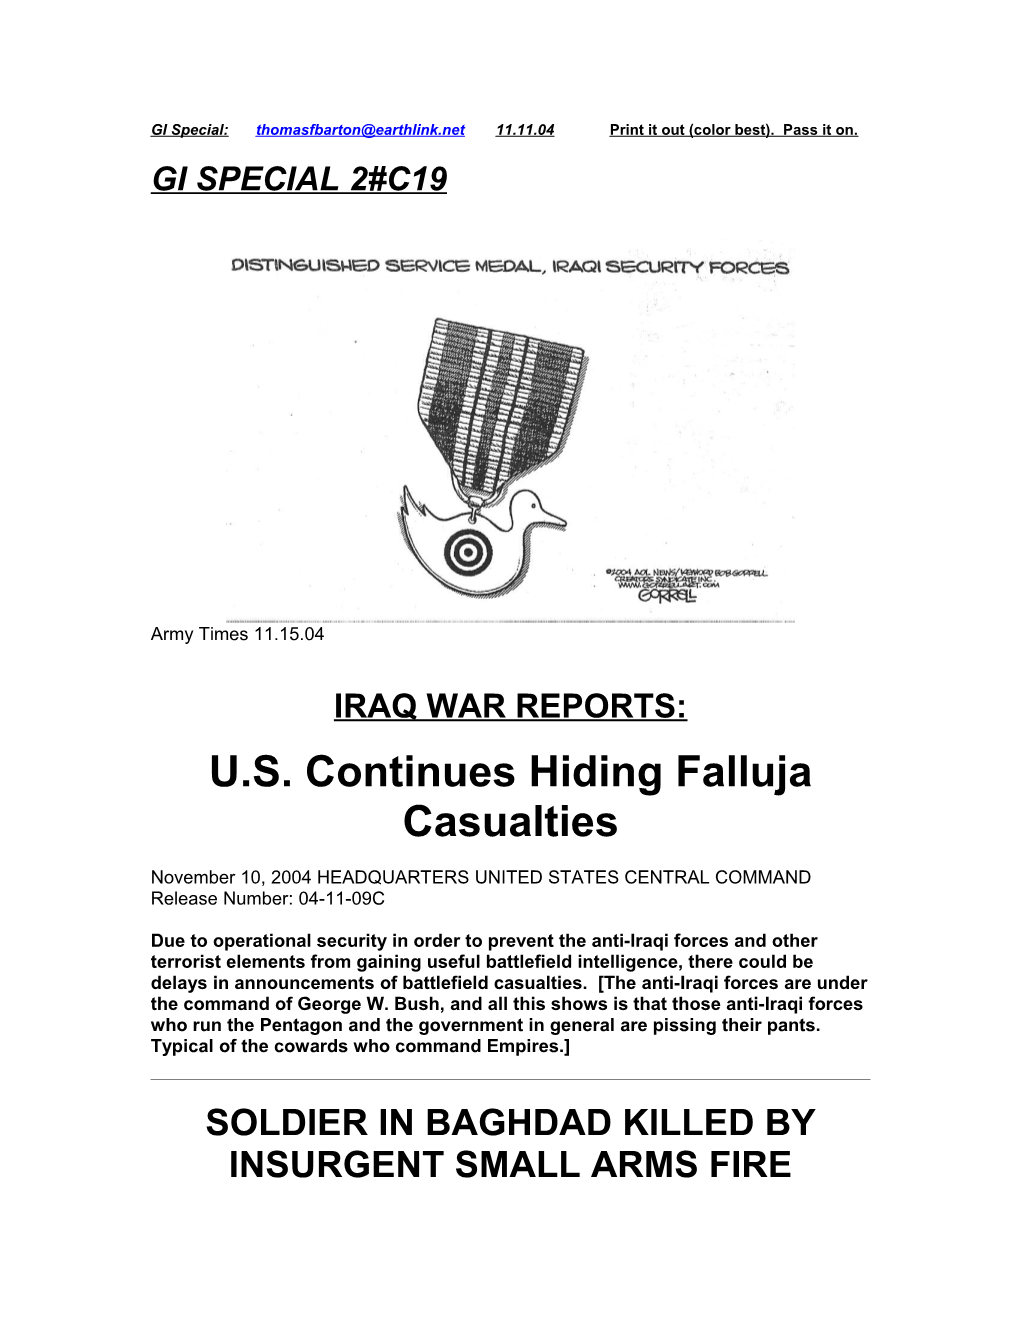 U.S. Continues Hiding Falluja Casualties